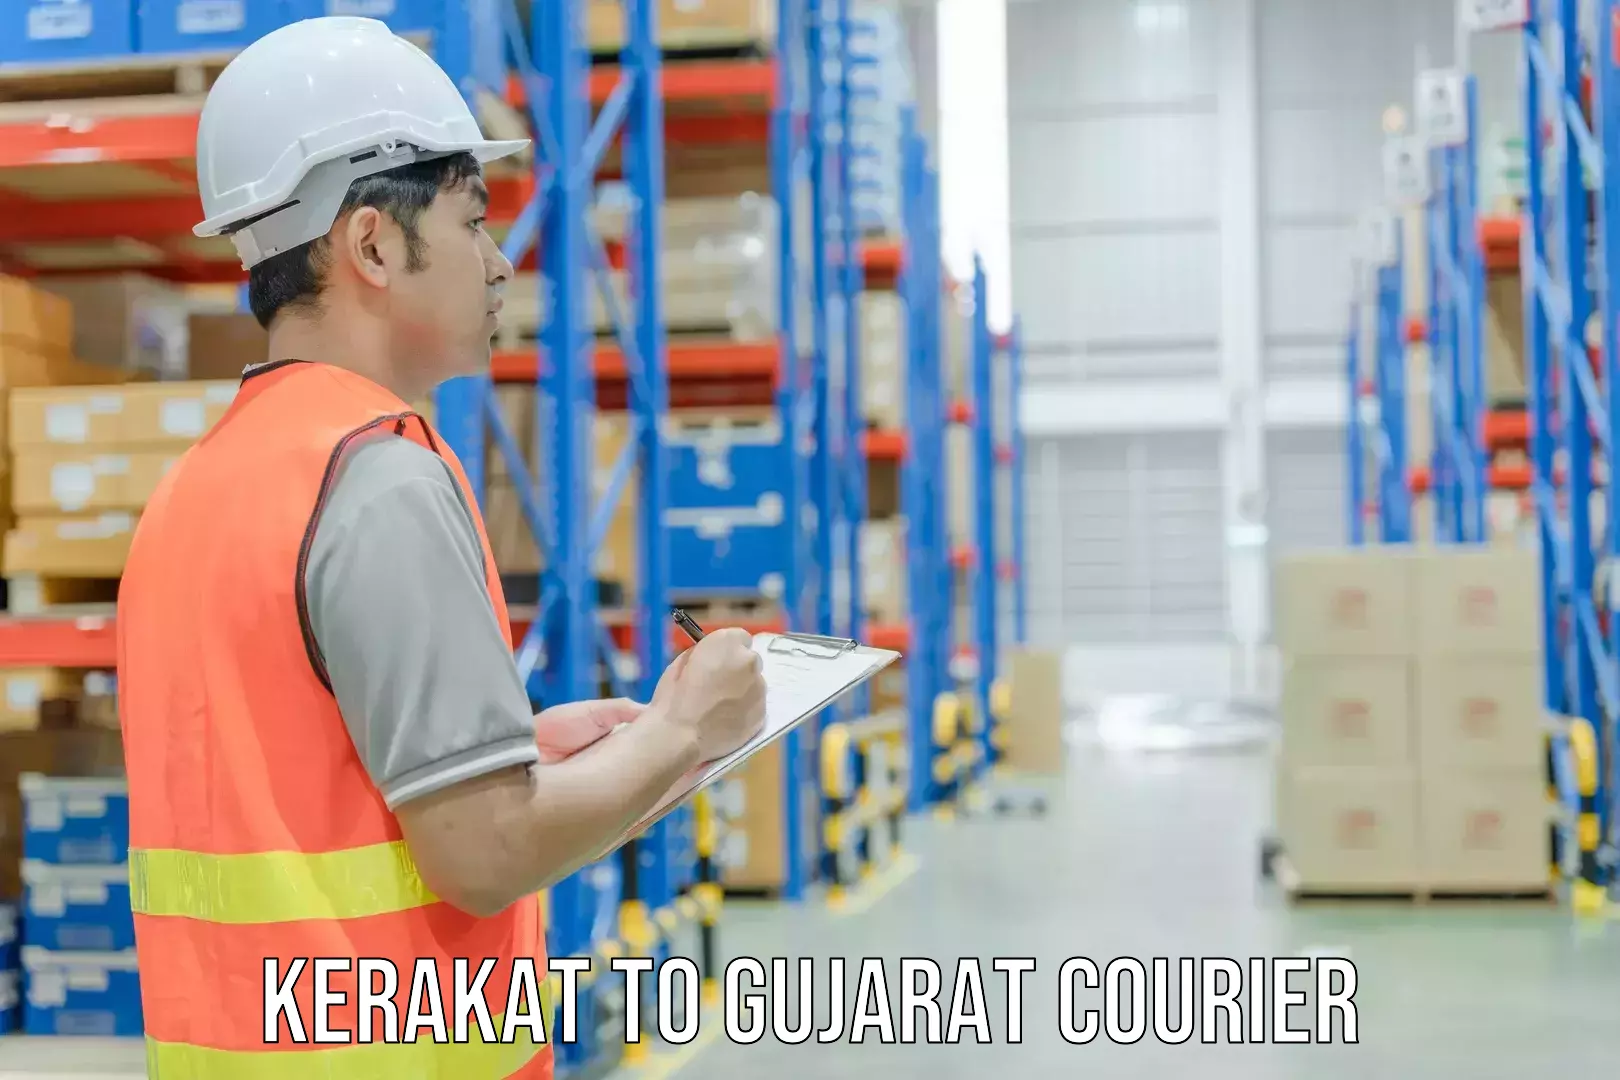 Global logistics network Kerakat to Halvad